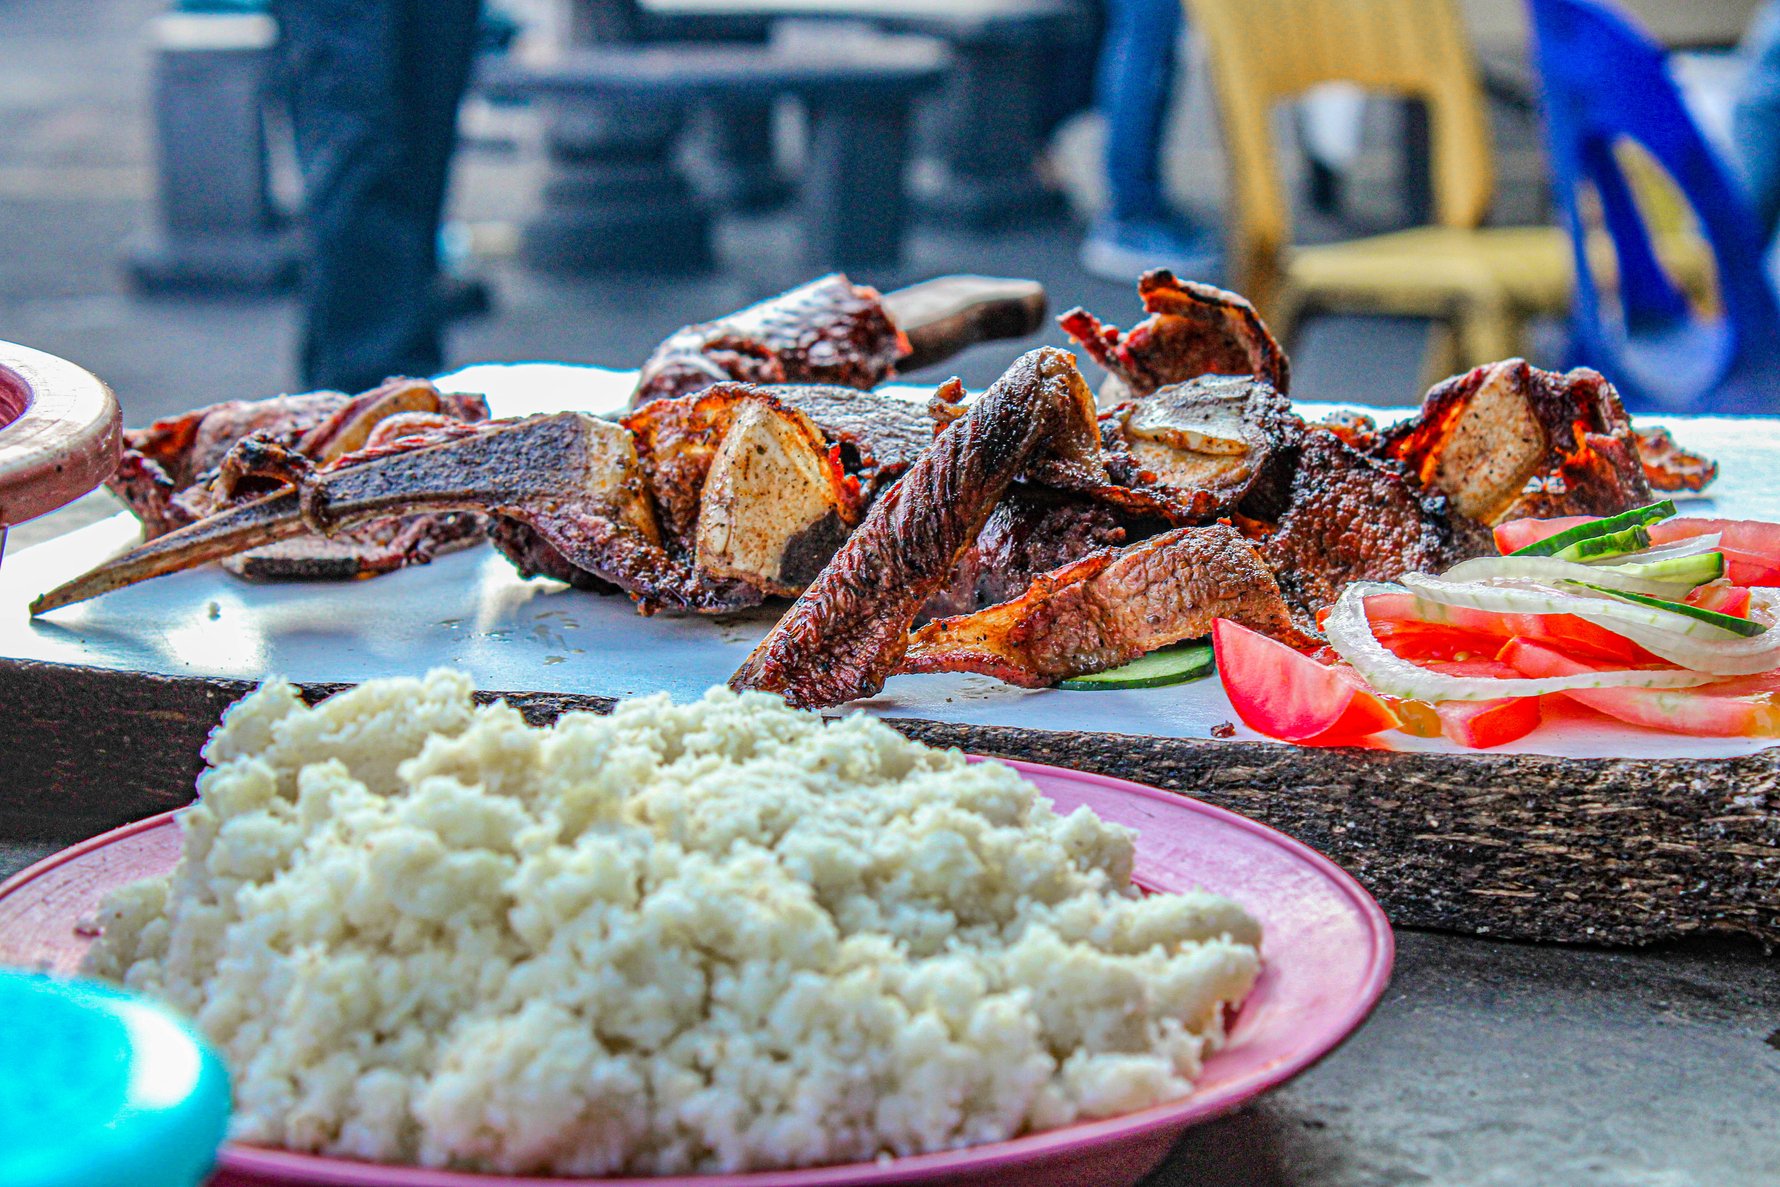 Small - From the grill at Kwa Mai Mai. Photo by Nkayiso Shabalala for Honest Travel Experience​